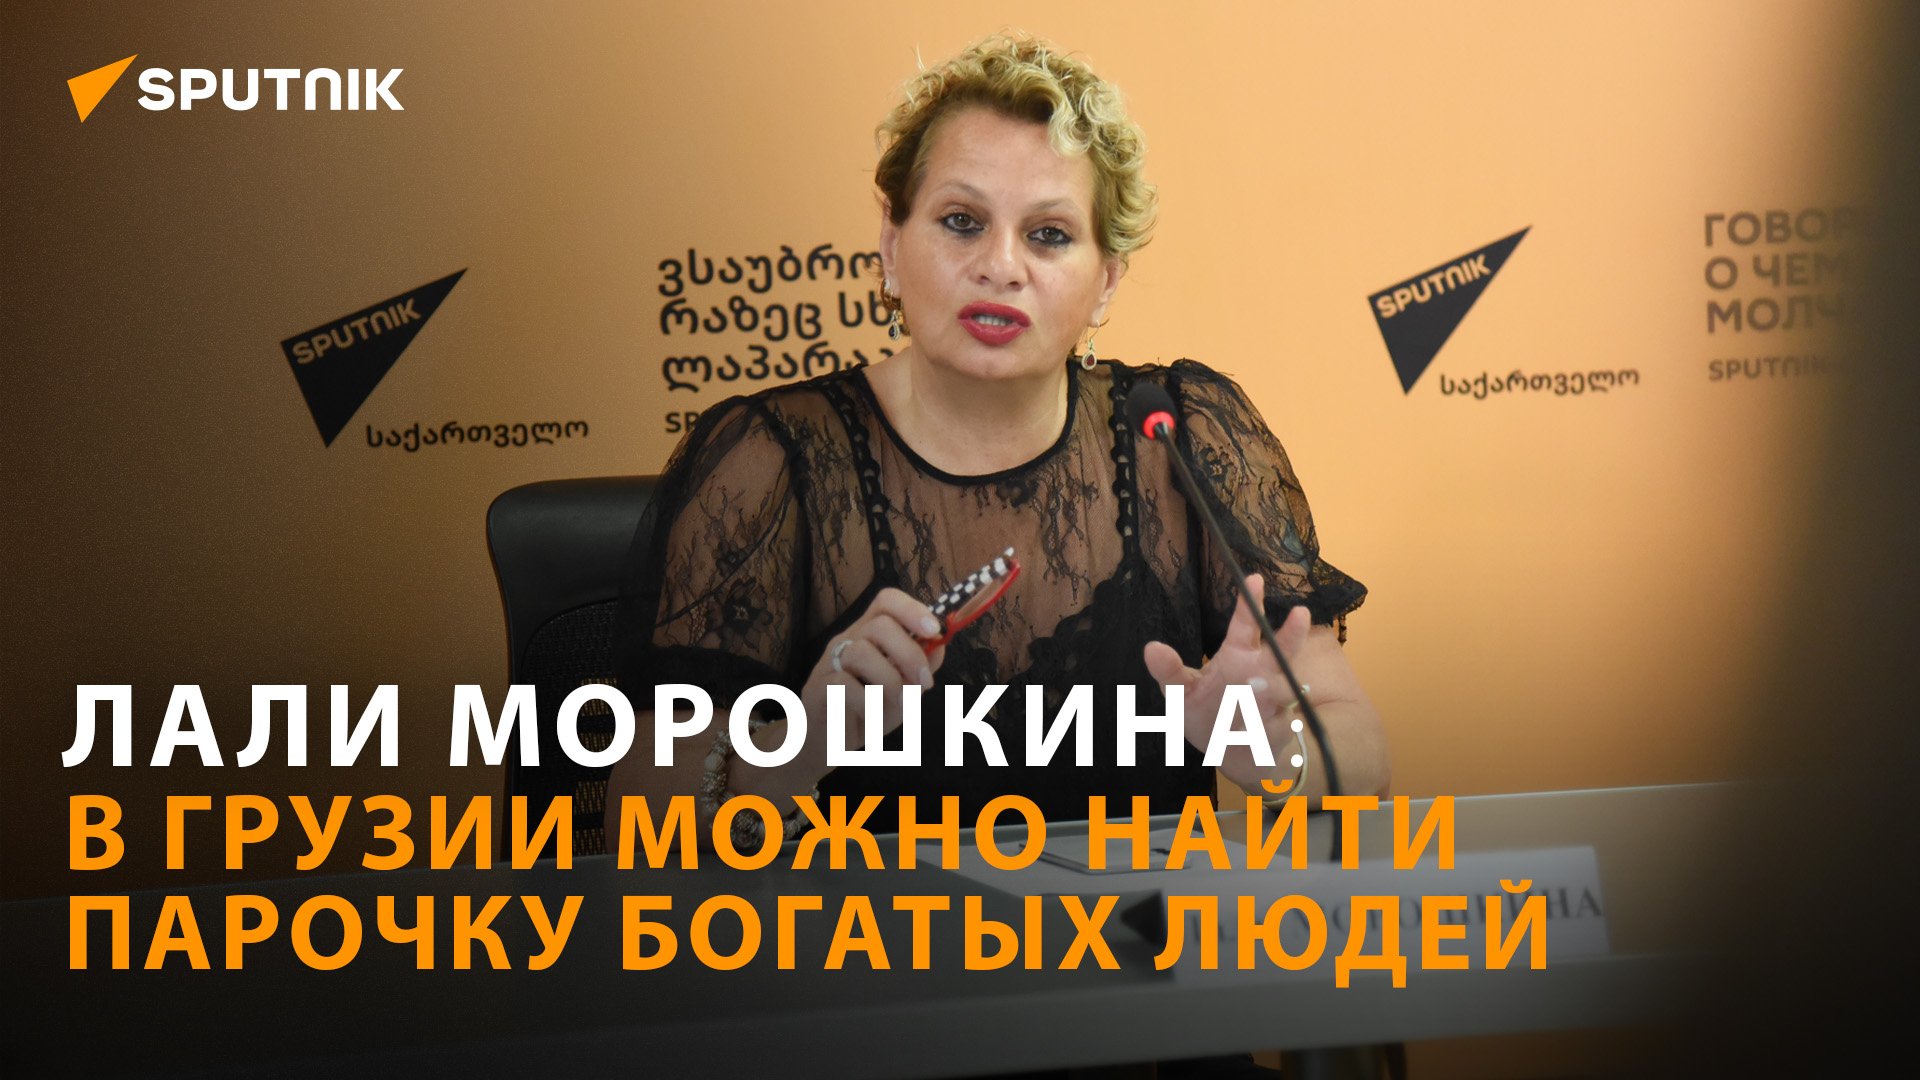 Морошкина: Иванишвили не олигарх, а на Западе богатые люди это монстры